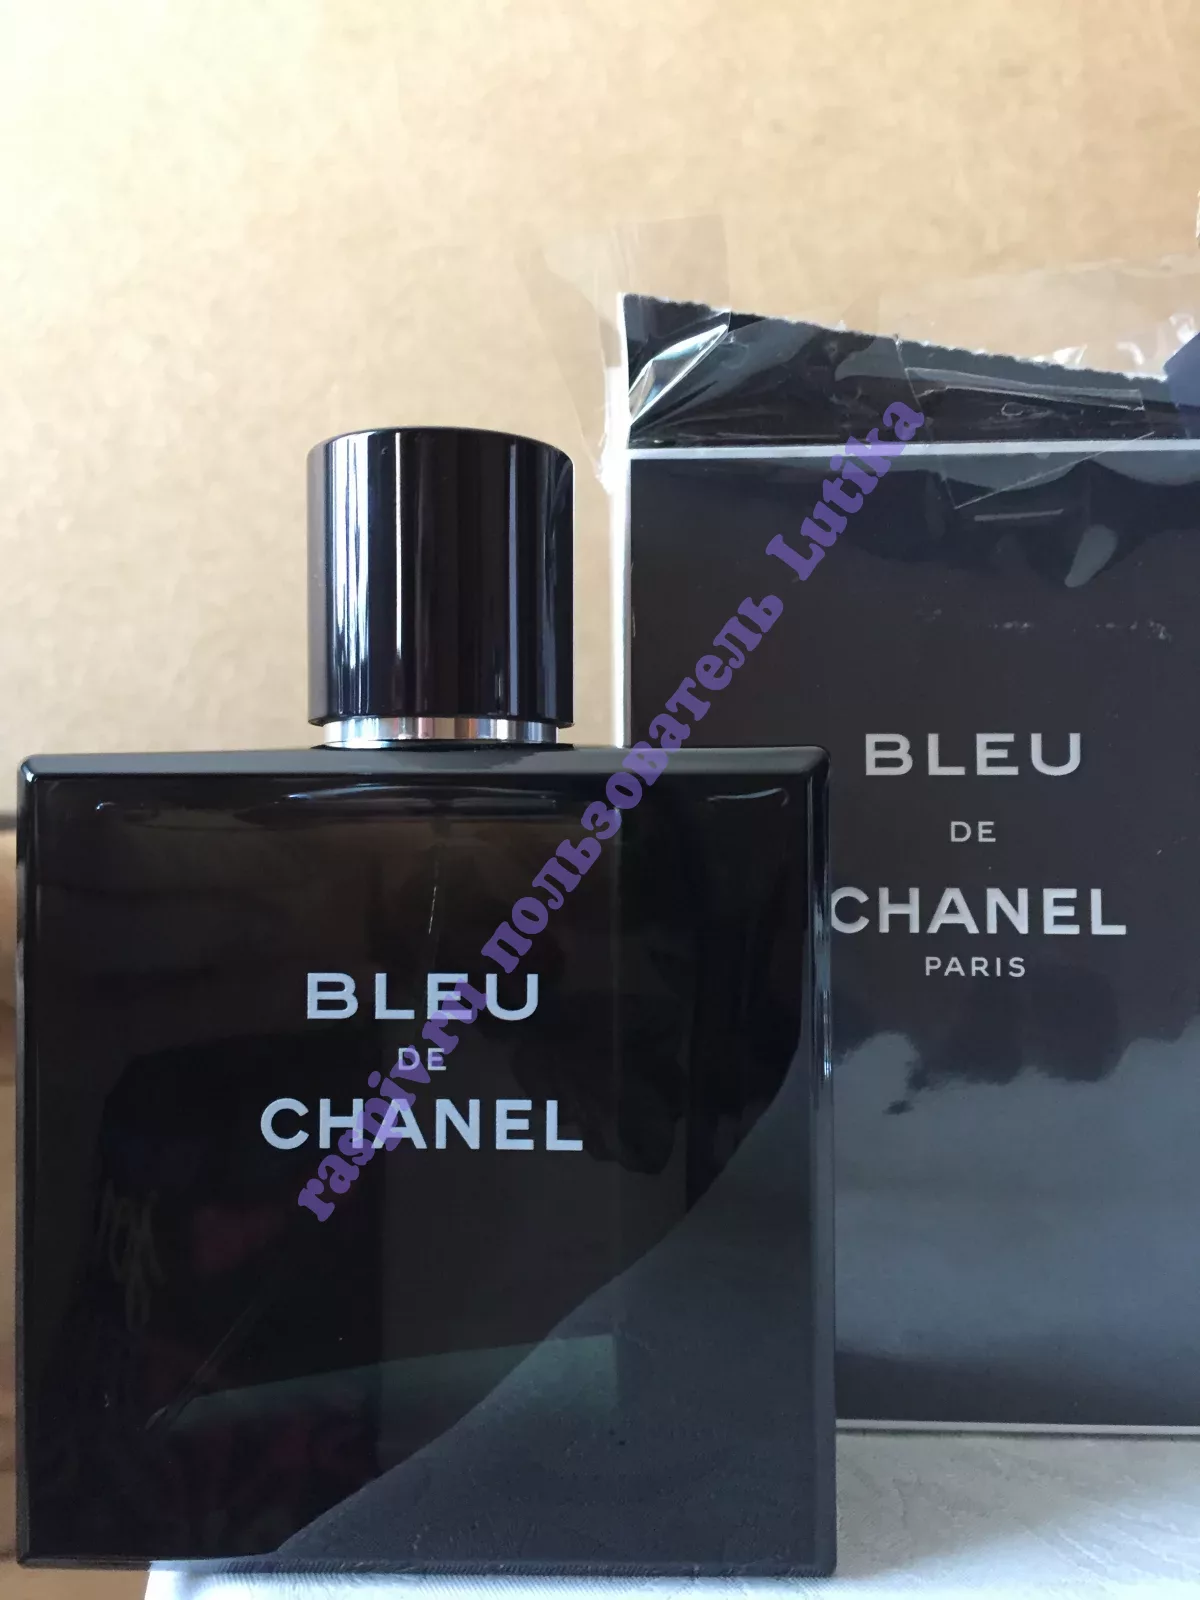 Chanel bleu de Chanel 10 мл. Bleu de Chanel картинка. Bleu de Chanel отзывы. Chanel bleu в руках. Chanel bleu отзывы